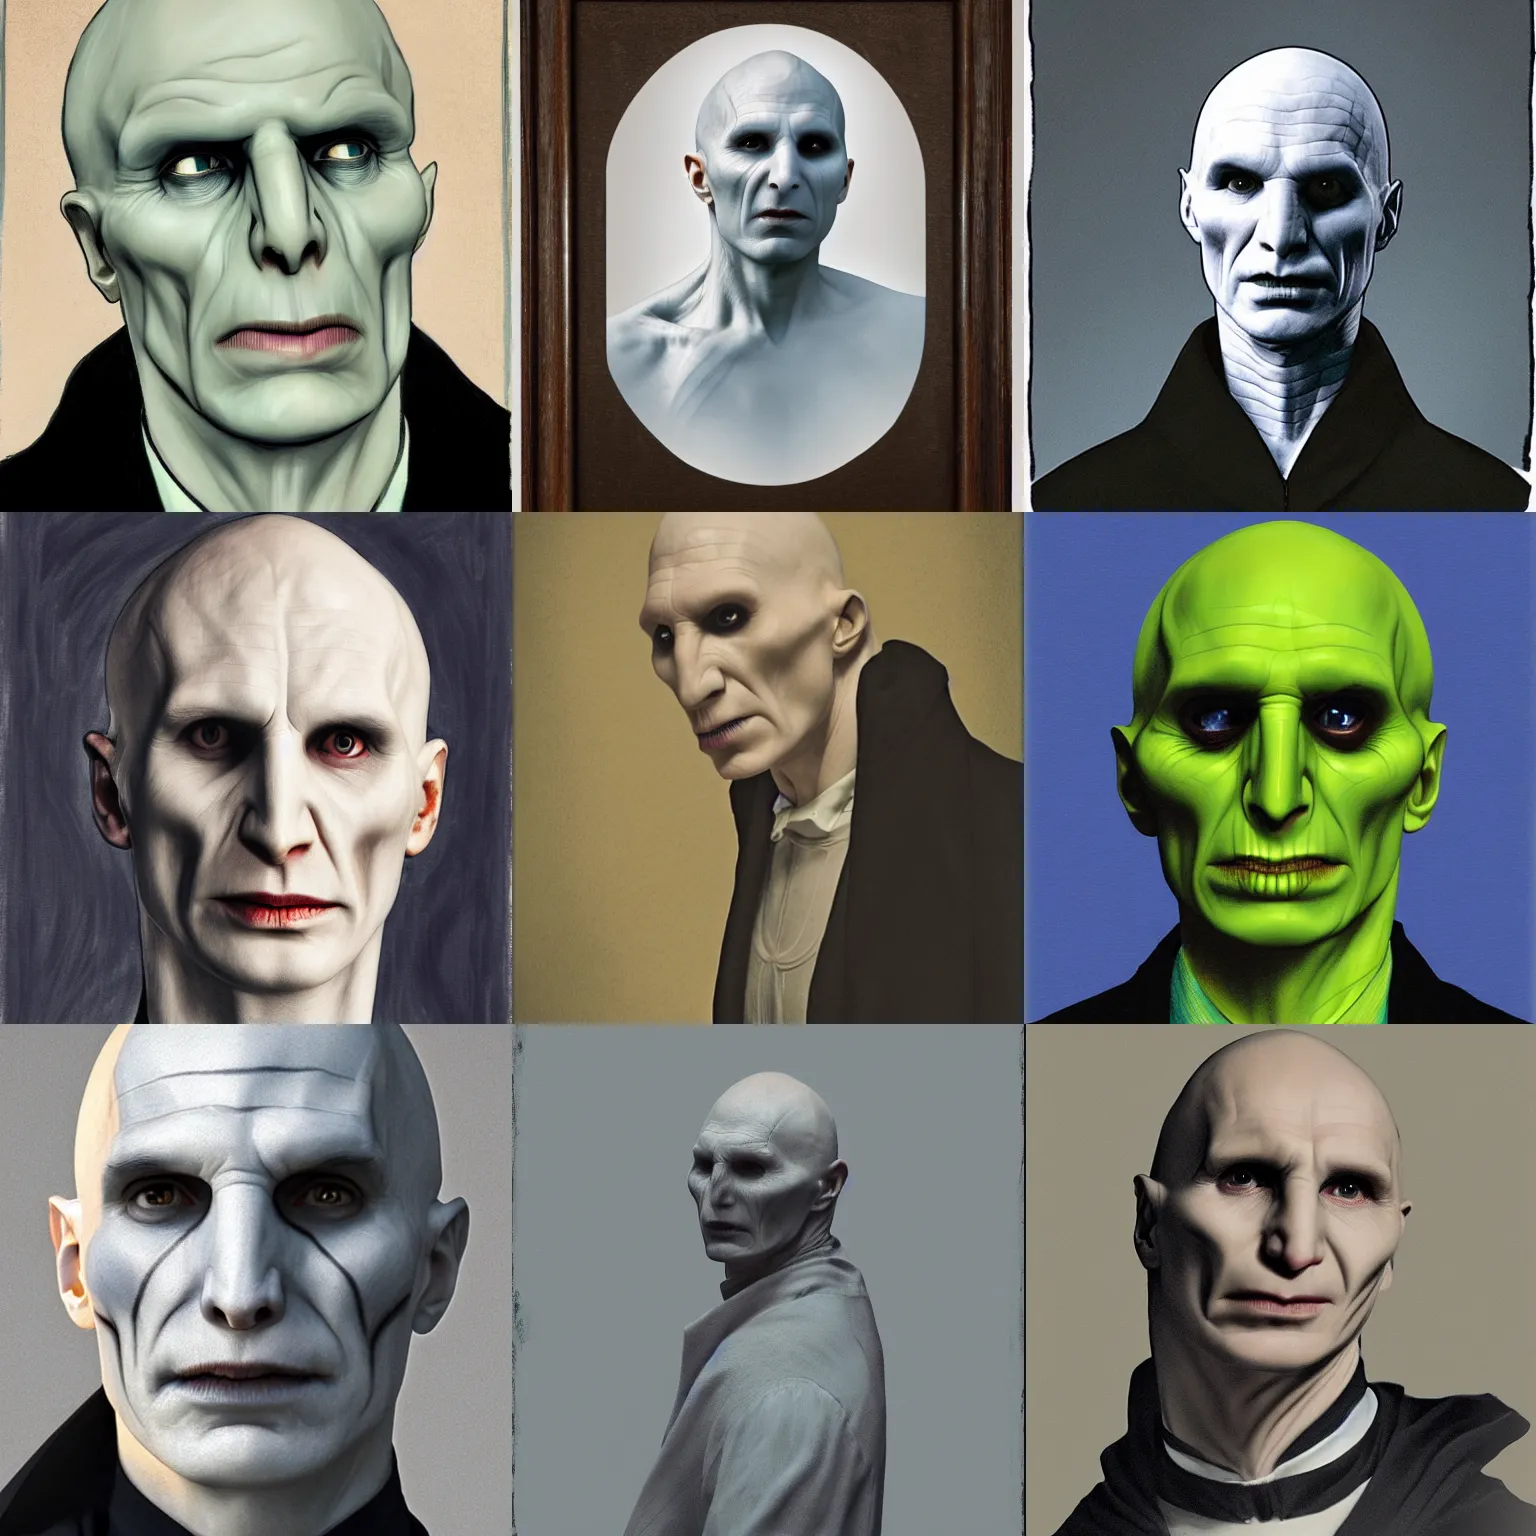 Prompt: Voldemort, portrait